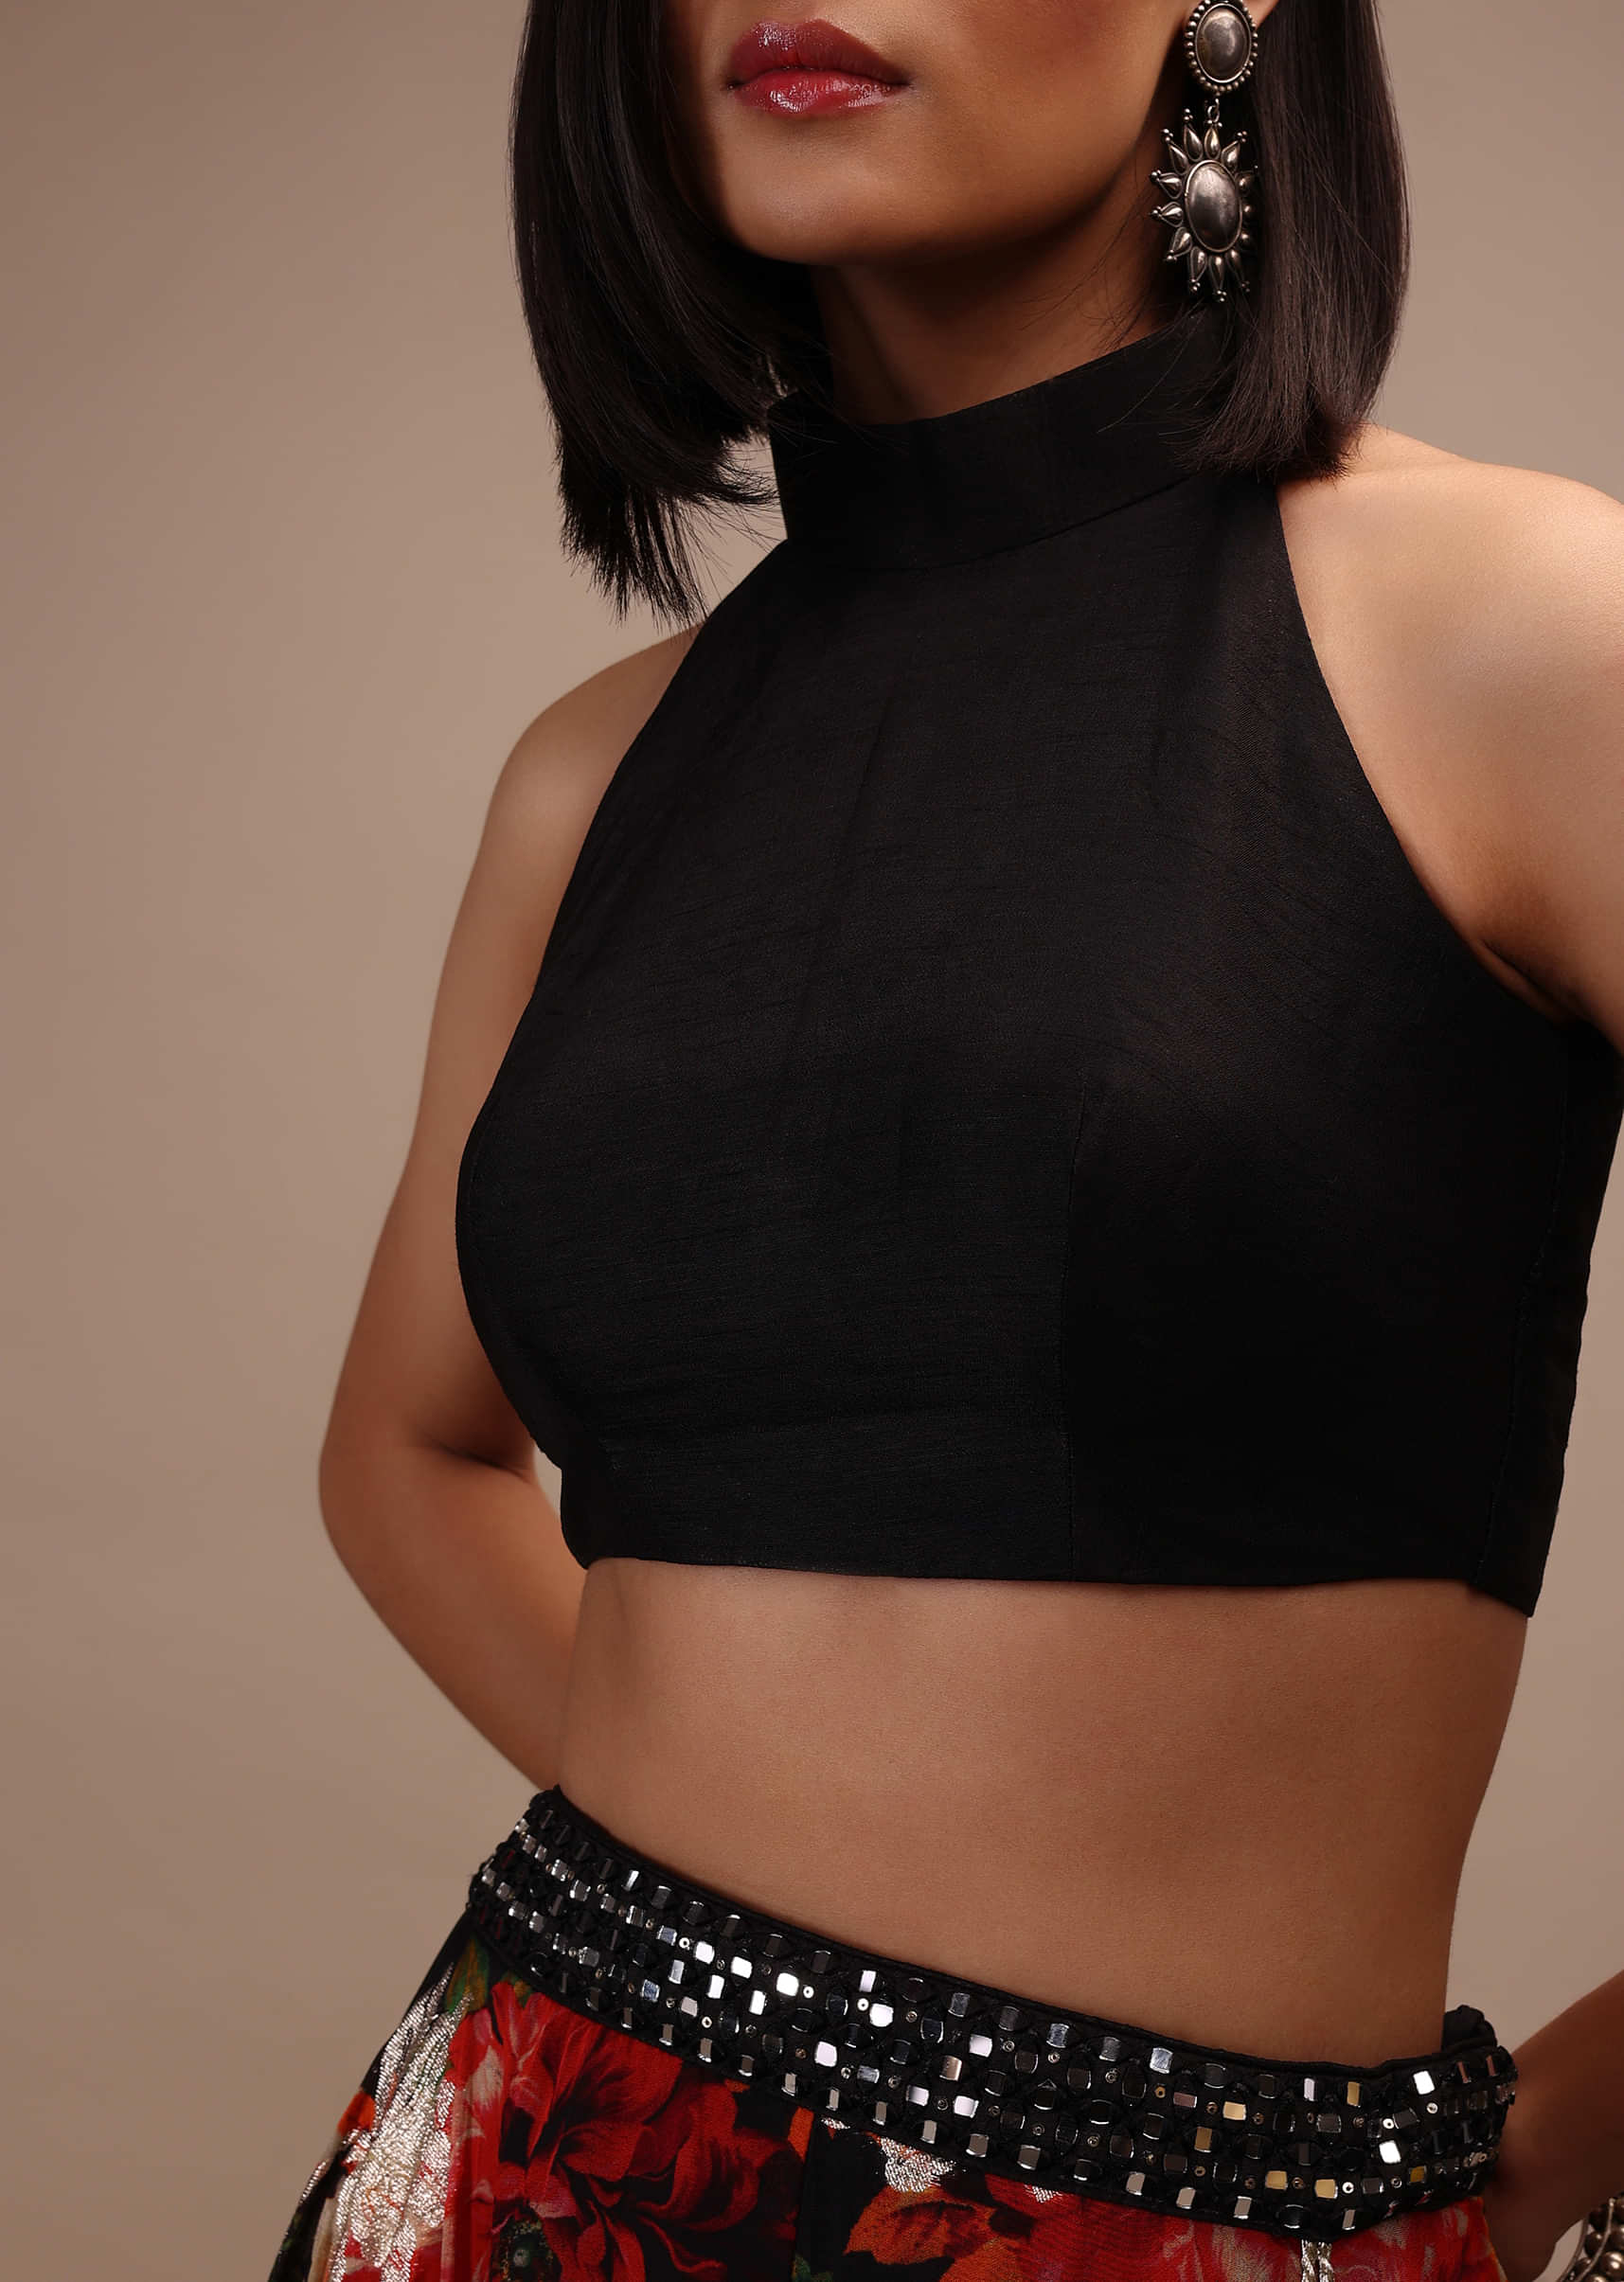 Buy Black Sleeveless Blouse In A High Collar And A Halter Neckline